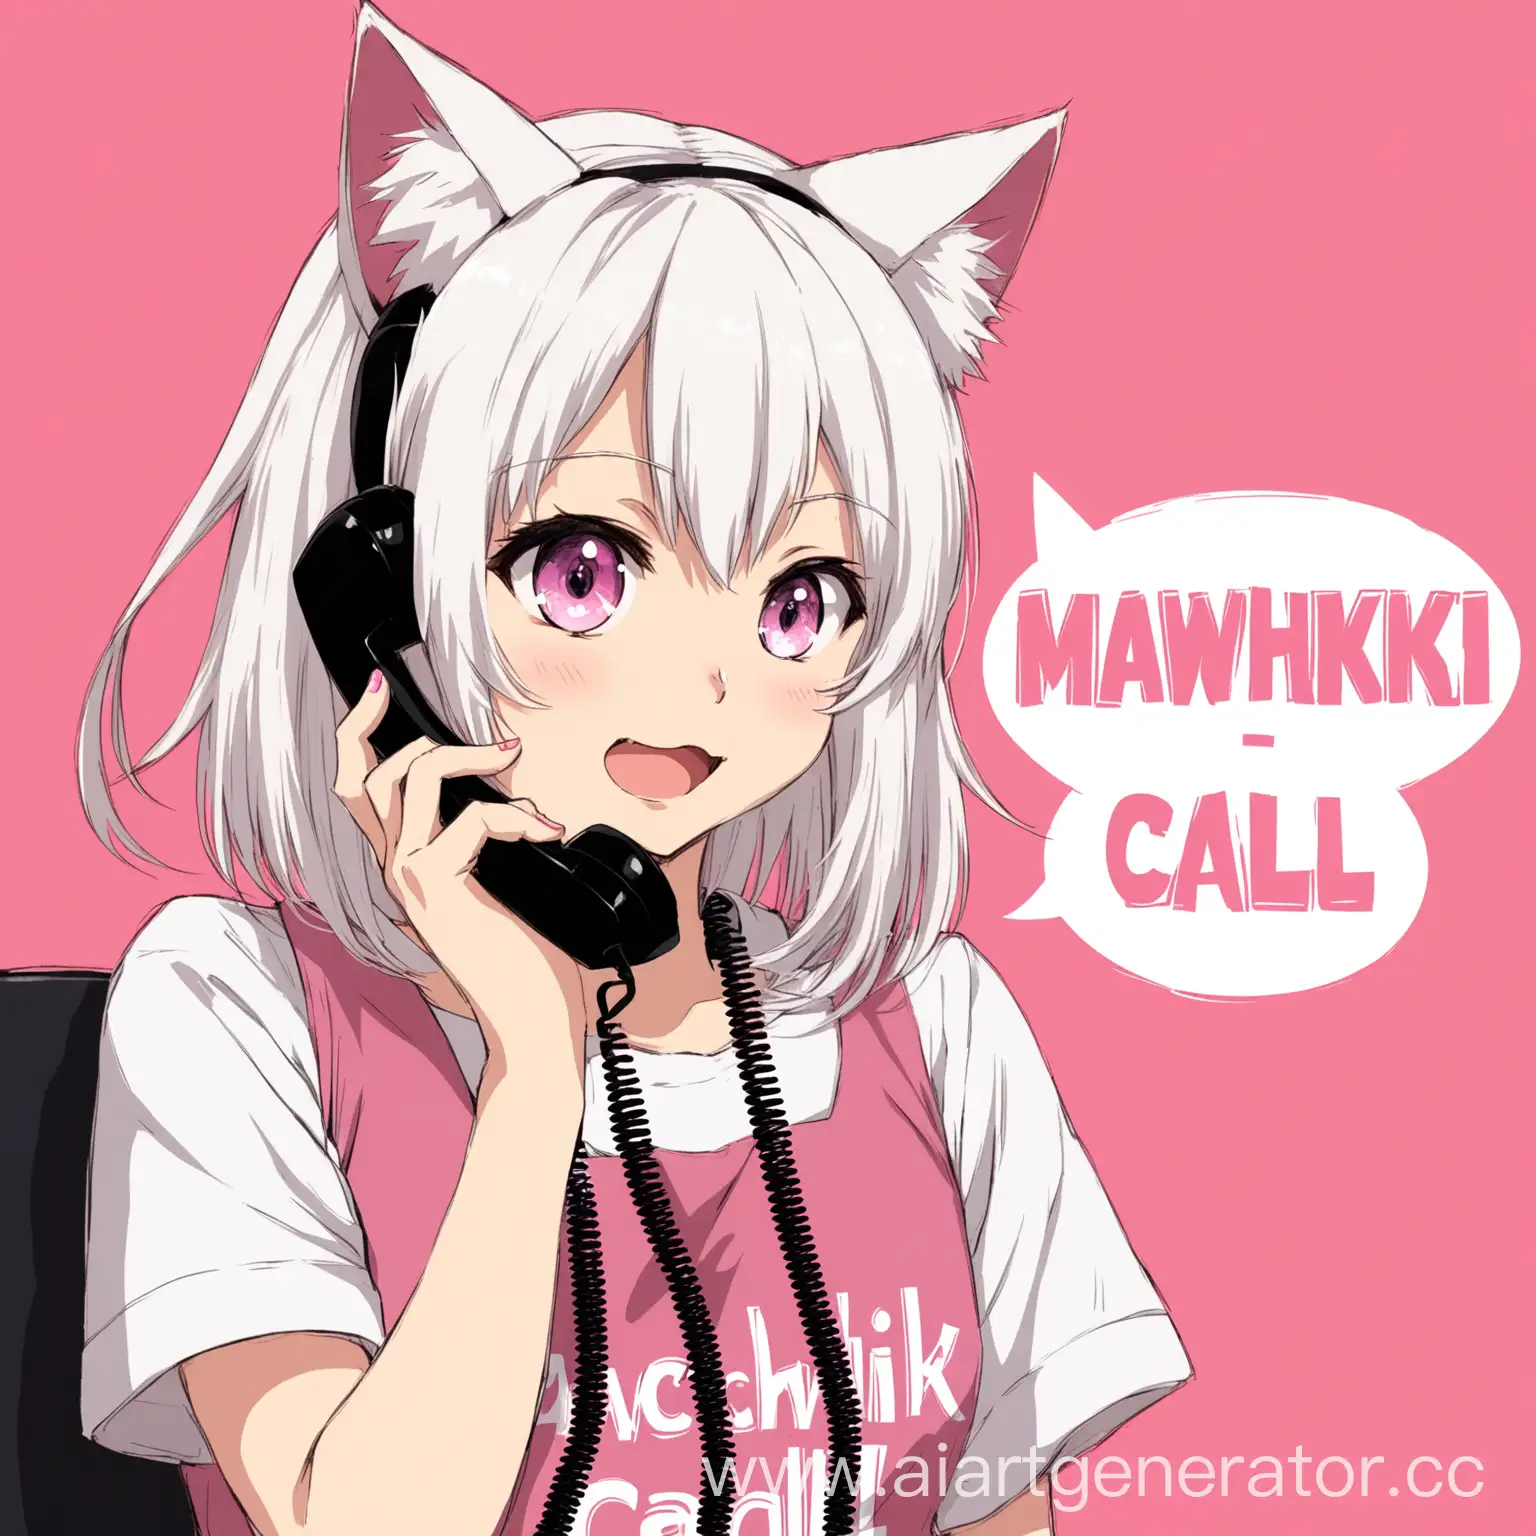 Anime-Girl-with-Cat-Ears-Talking-on-Phone-in-Mawchik-Call-Scene